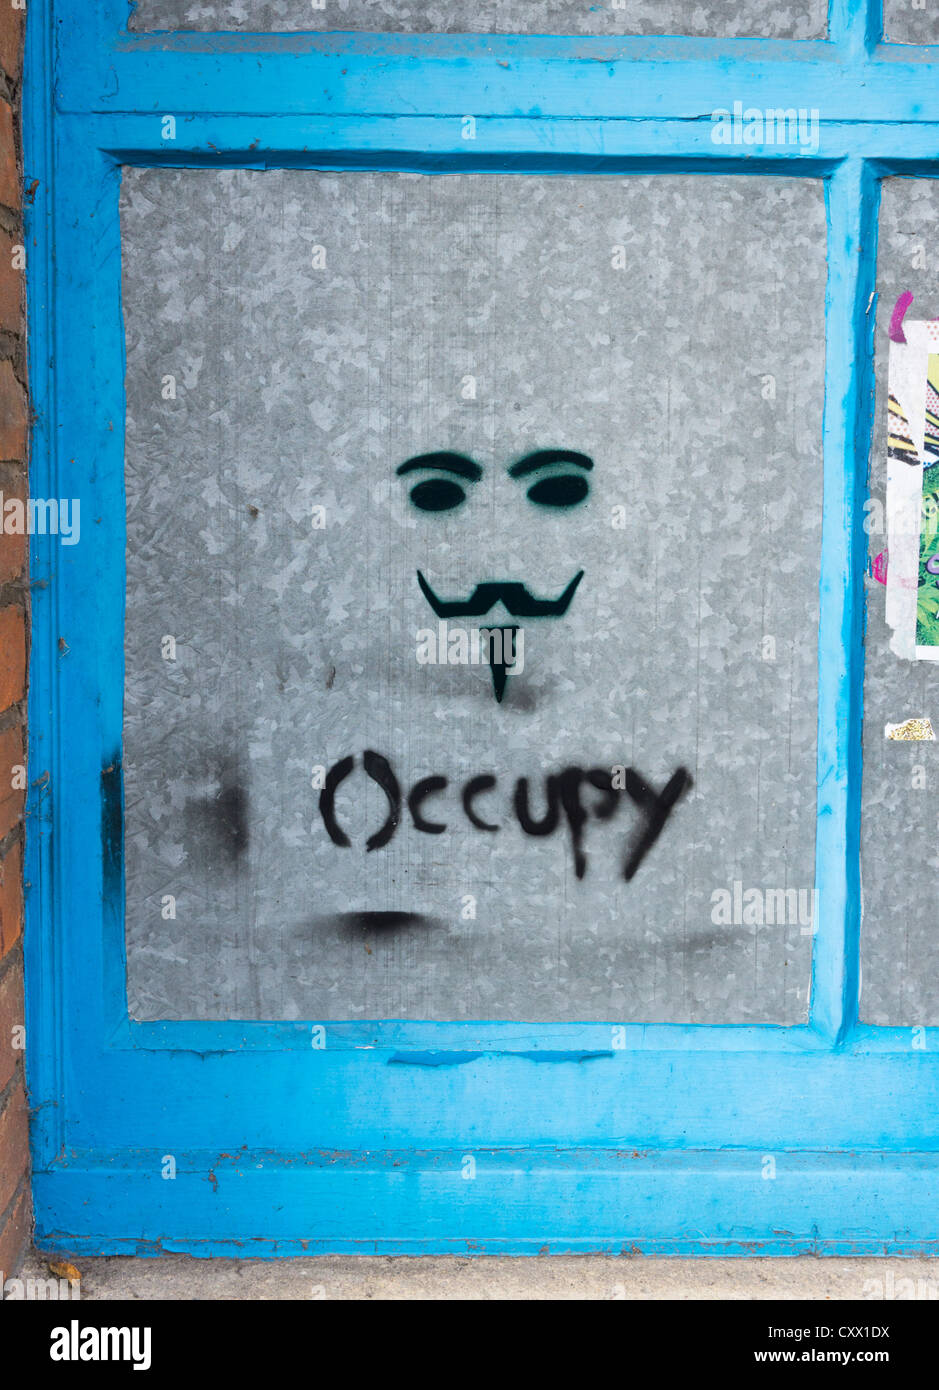 Occupy graffiti logo, UK Stock Photo